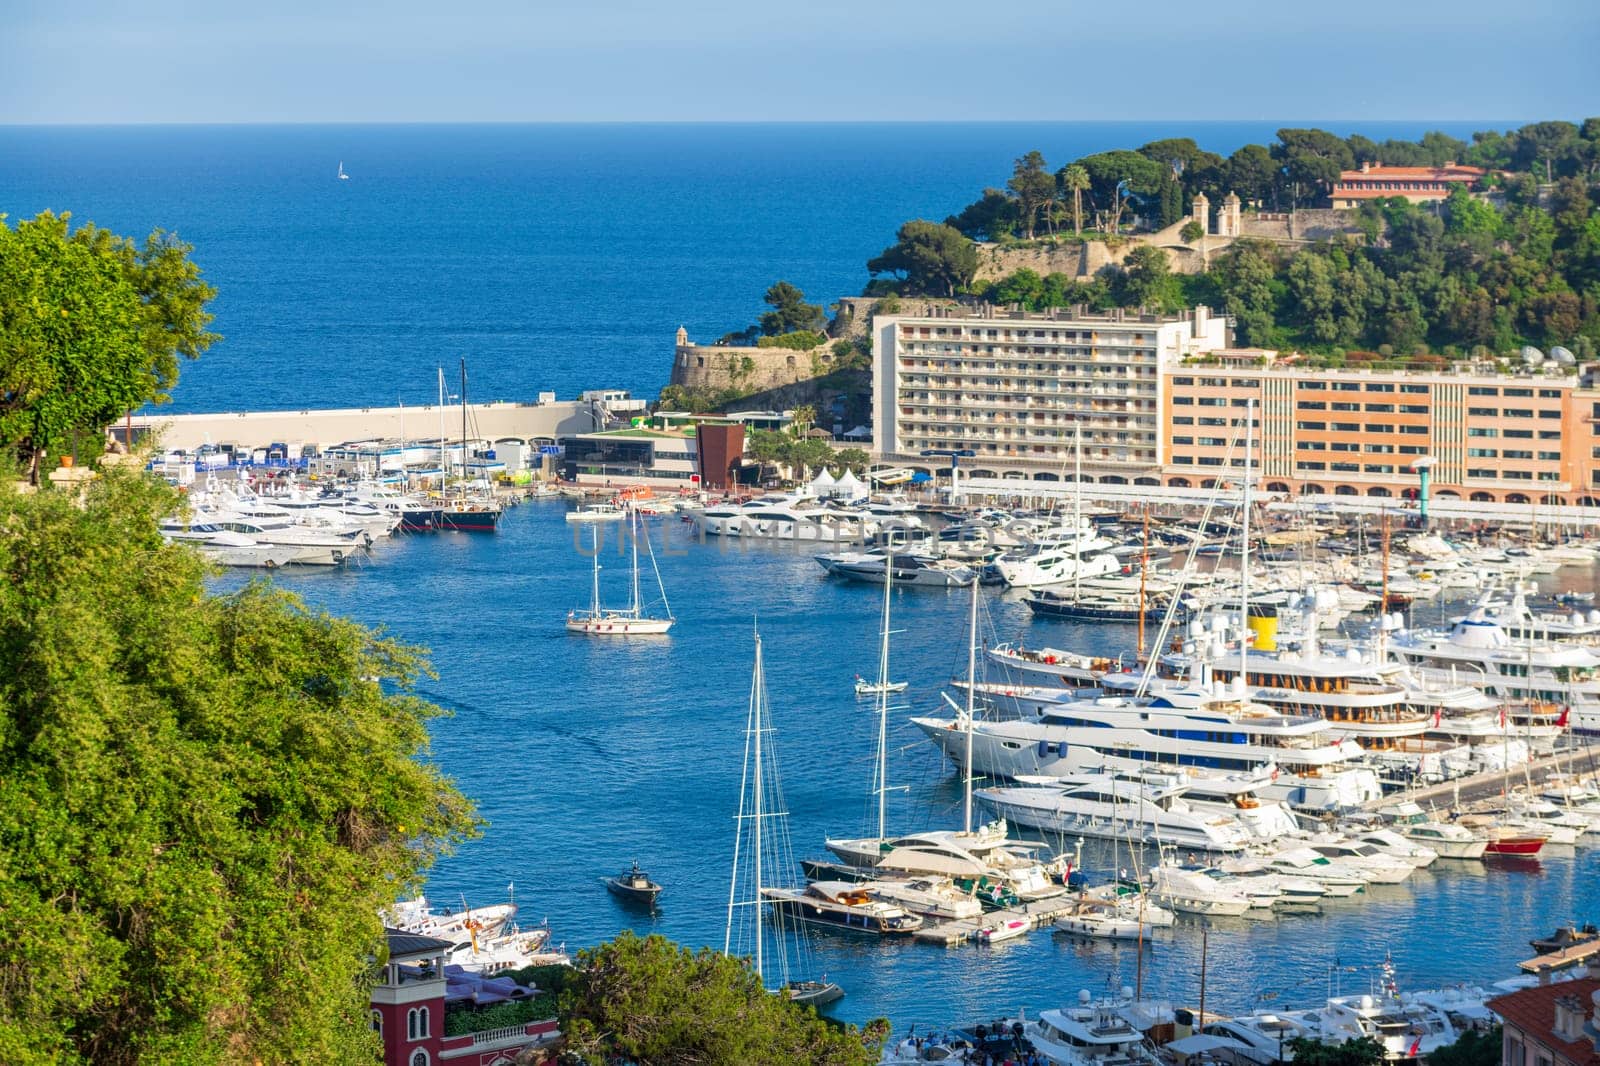 Panoramic view of Monte Carlo marina and cityscape. Principality of Monaco, French Riviera